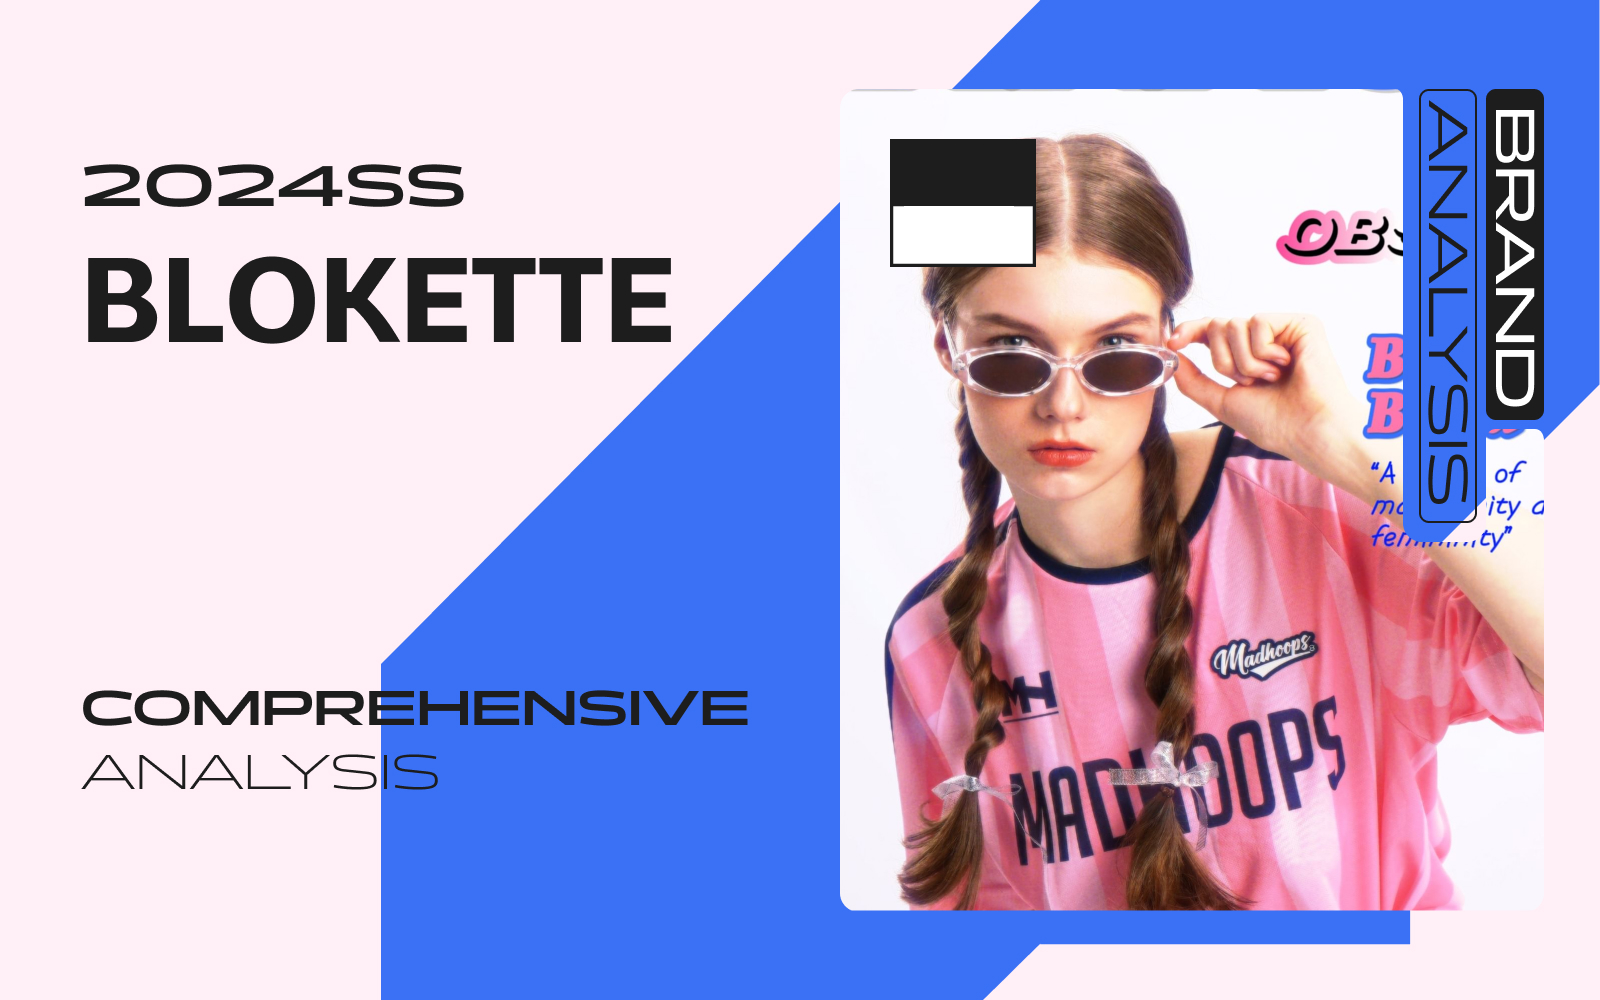 Blokette -- The Comprehensive Analysis of Womenswear Designer Brands